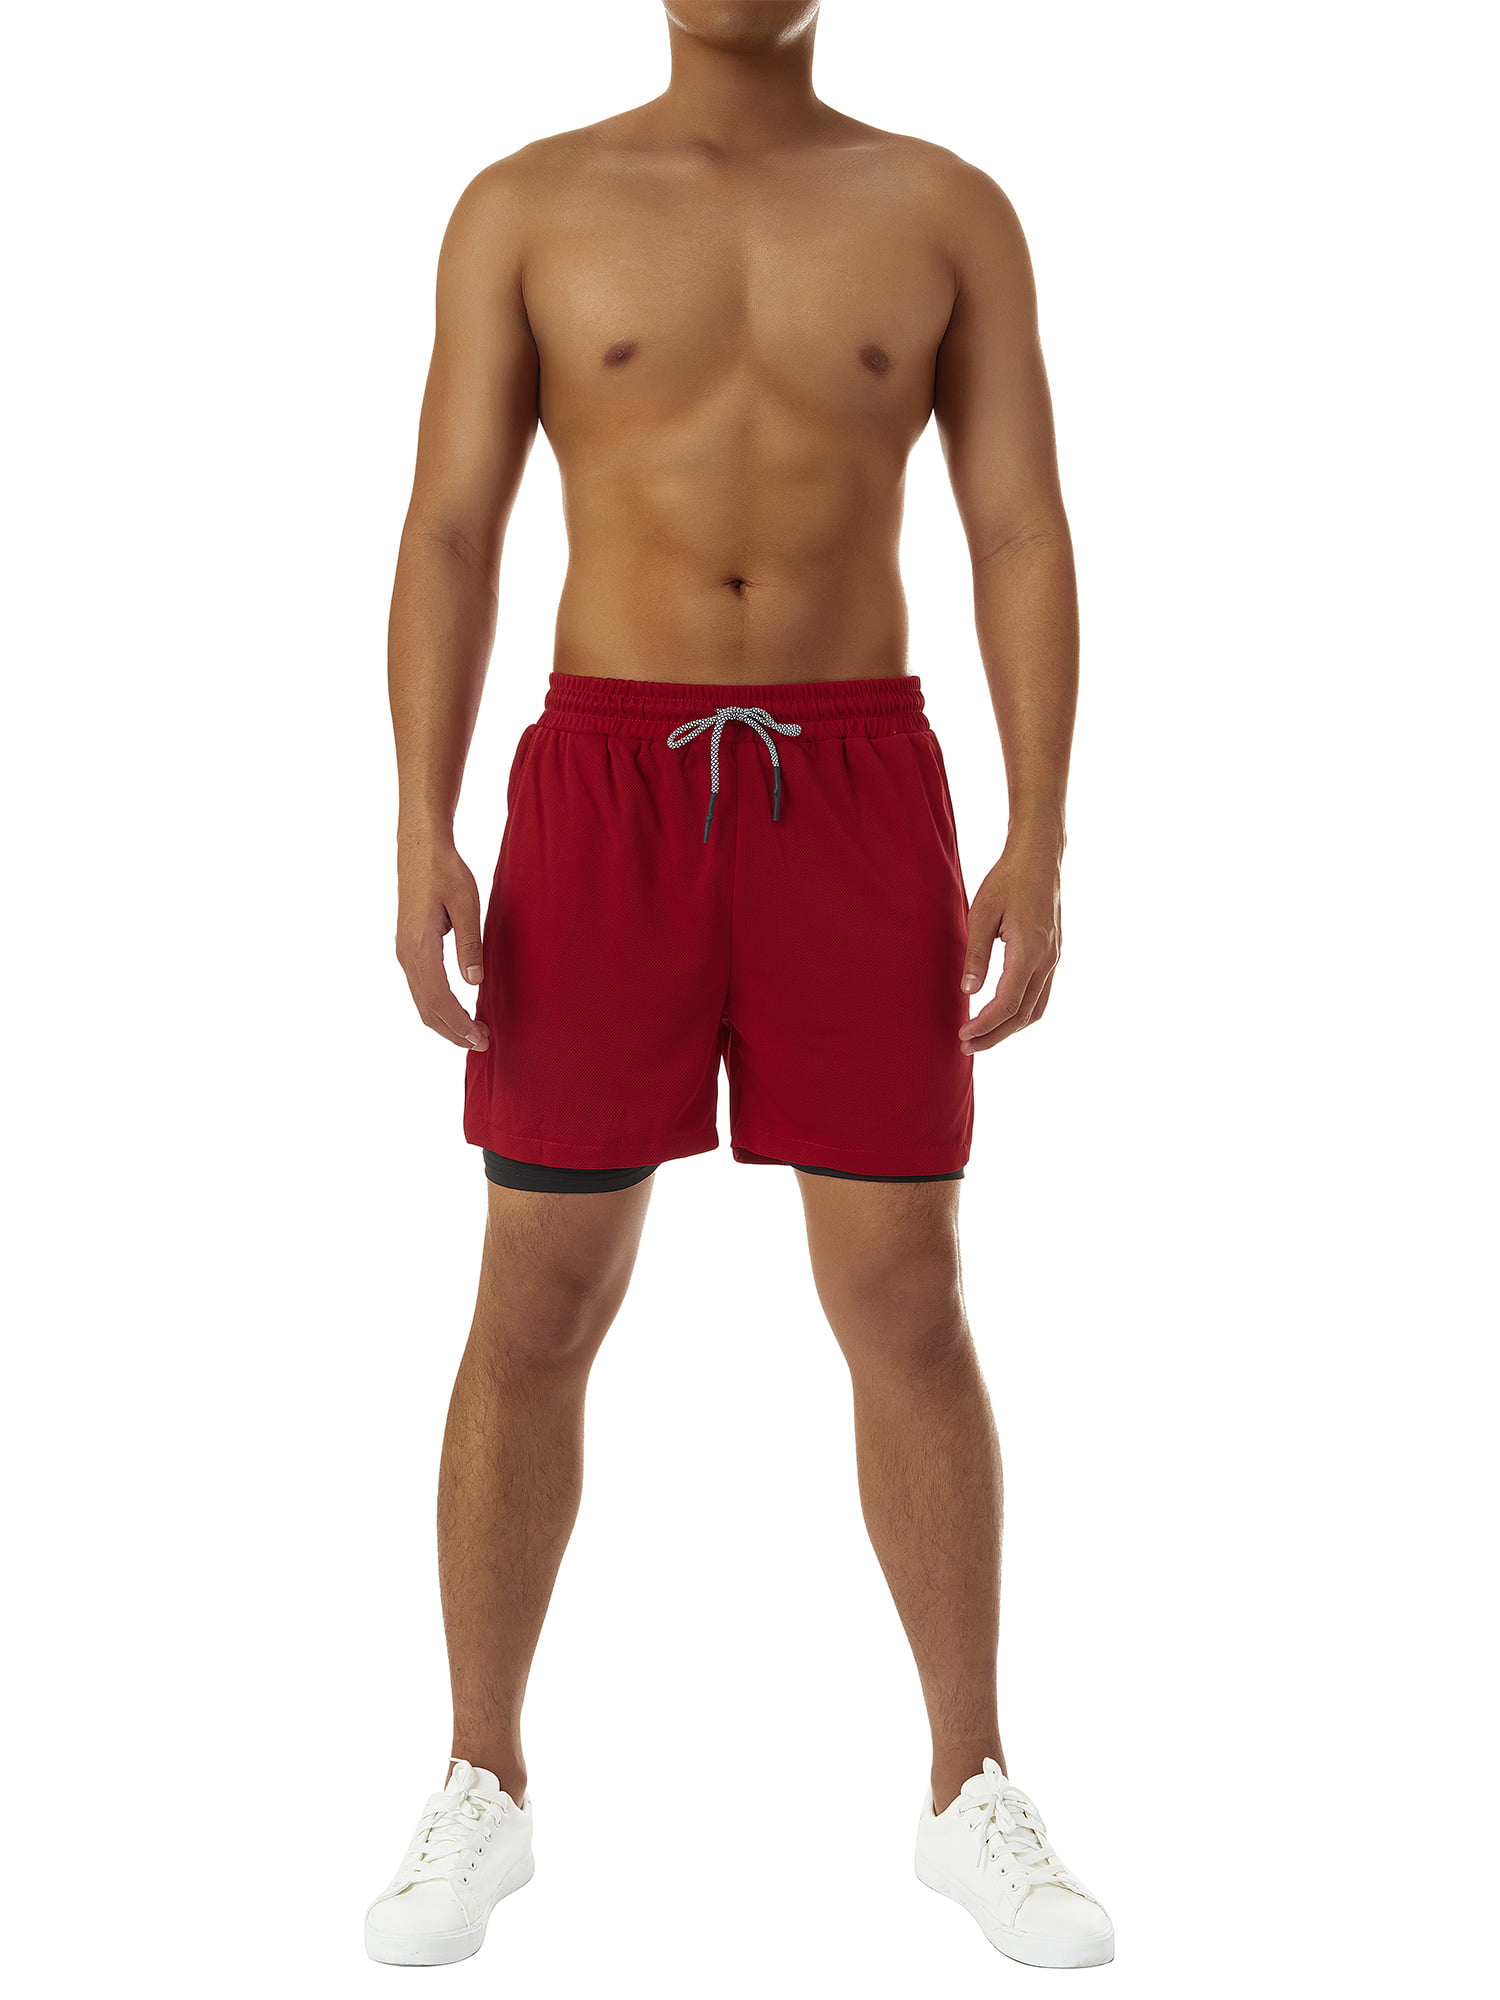 Genuiskids Genuiskids Mens 2 in 1 Running Shorts | Gym Workout Athletic  Training Compression Underwear Liner Double Layer Sports Shorts with Pockets